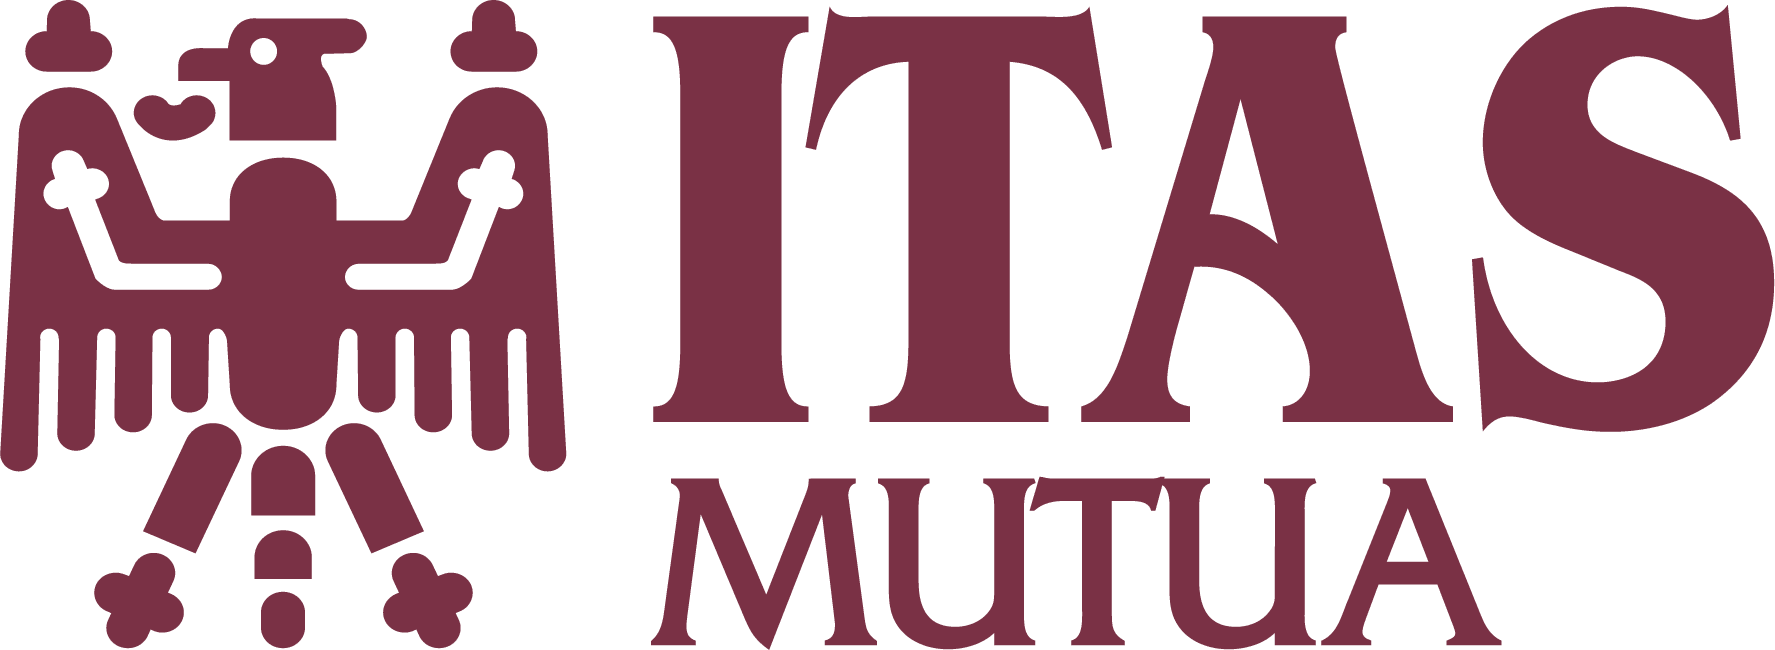 itas 2019 logo mutua it